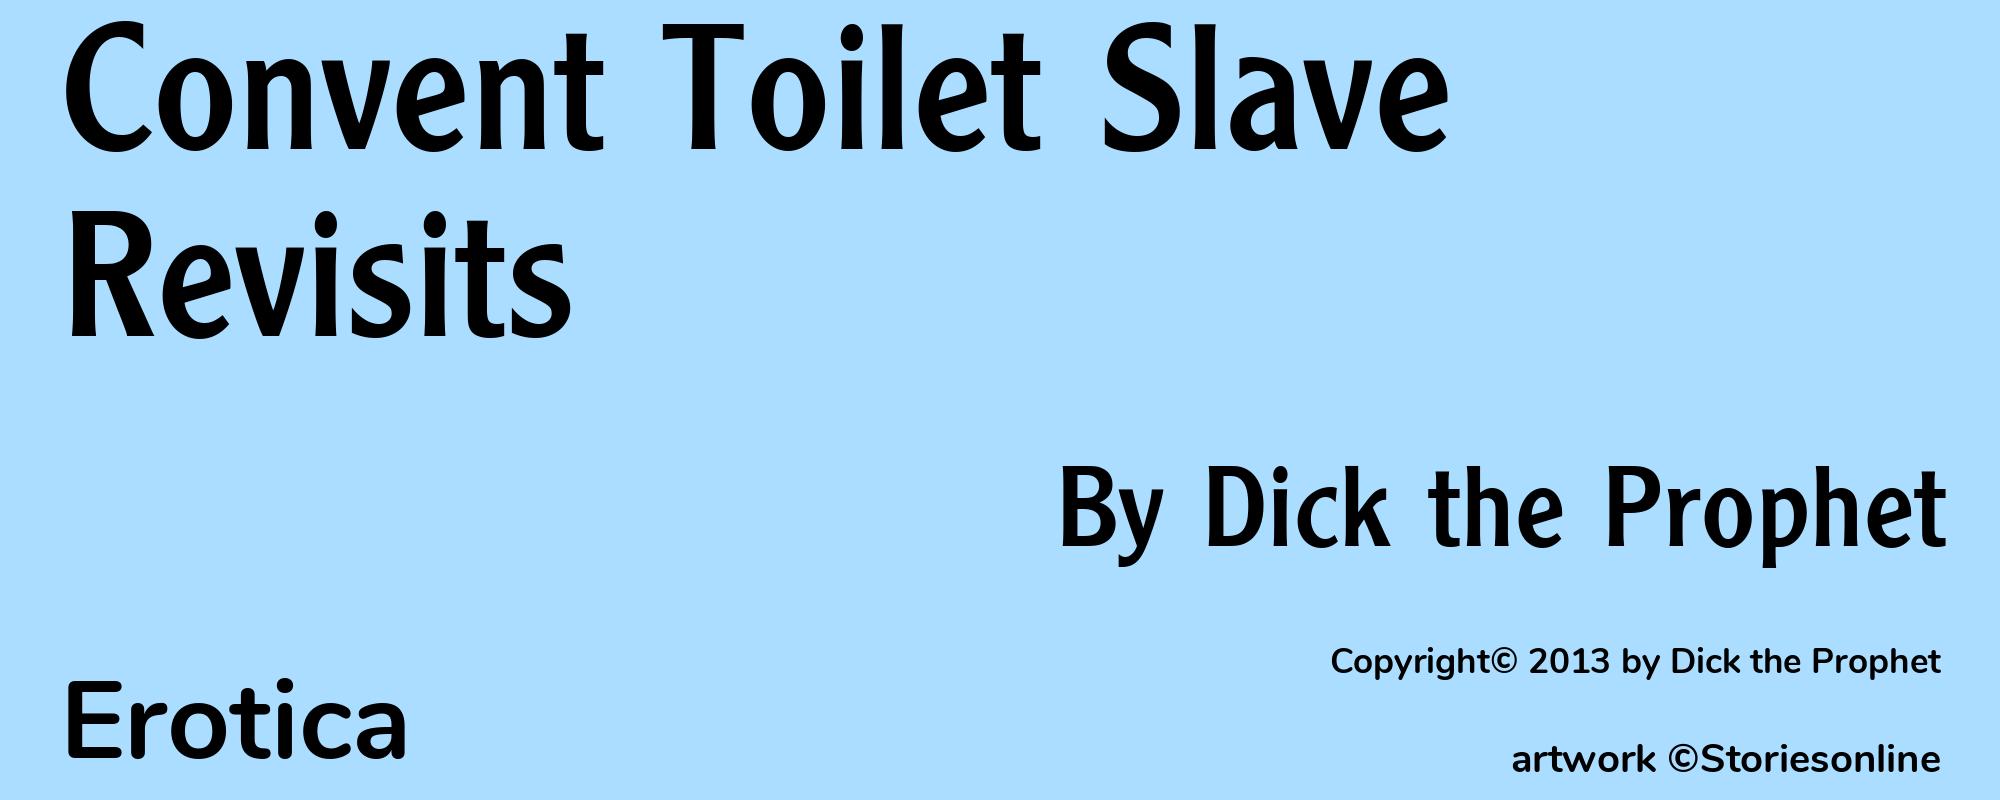 Convent Toilet Slave Revisits - Cover